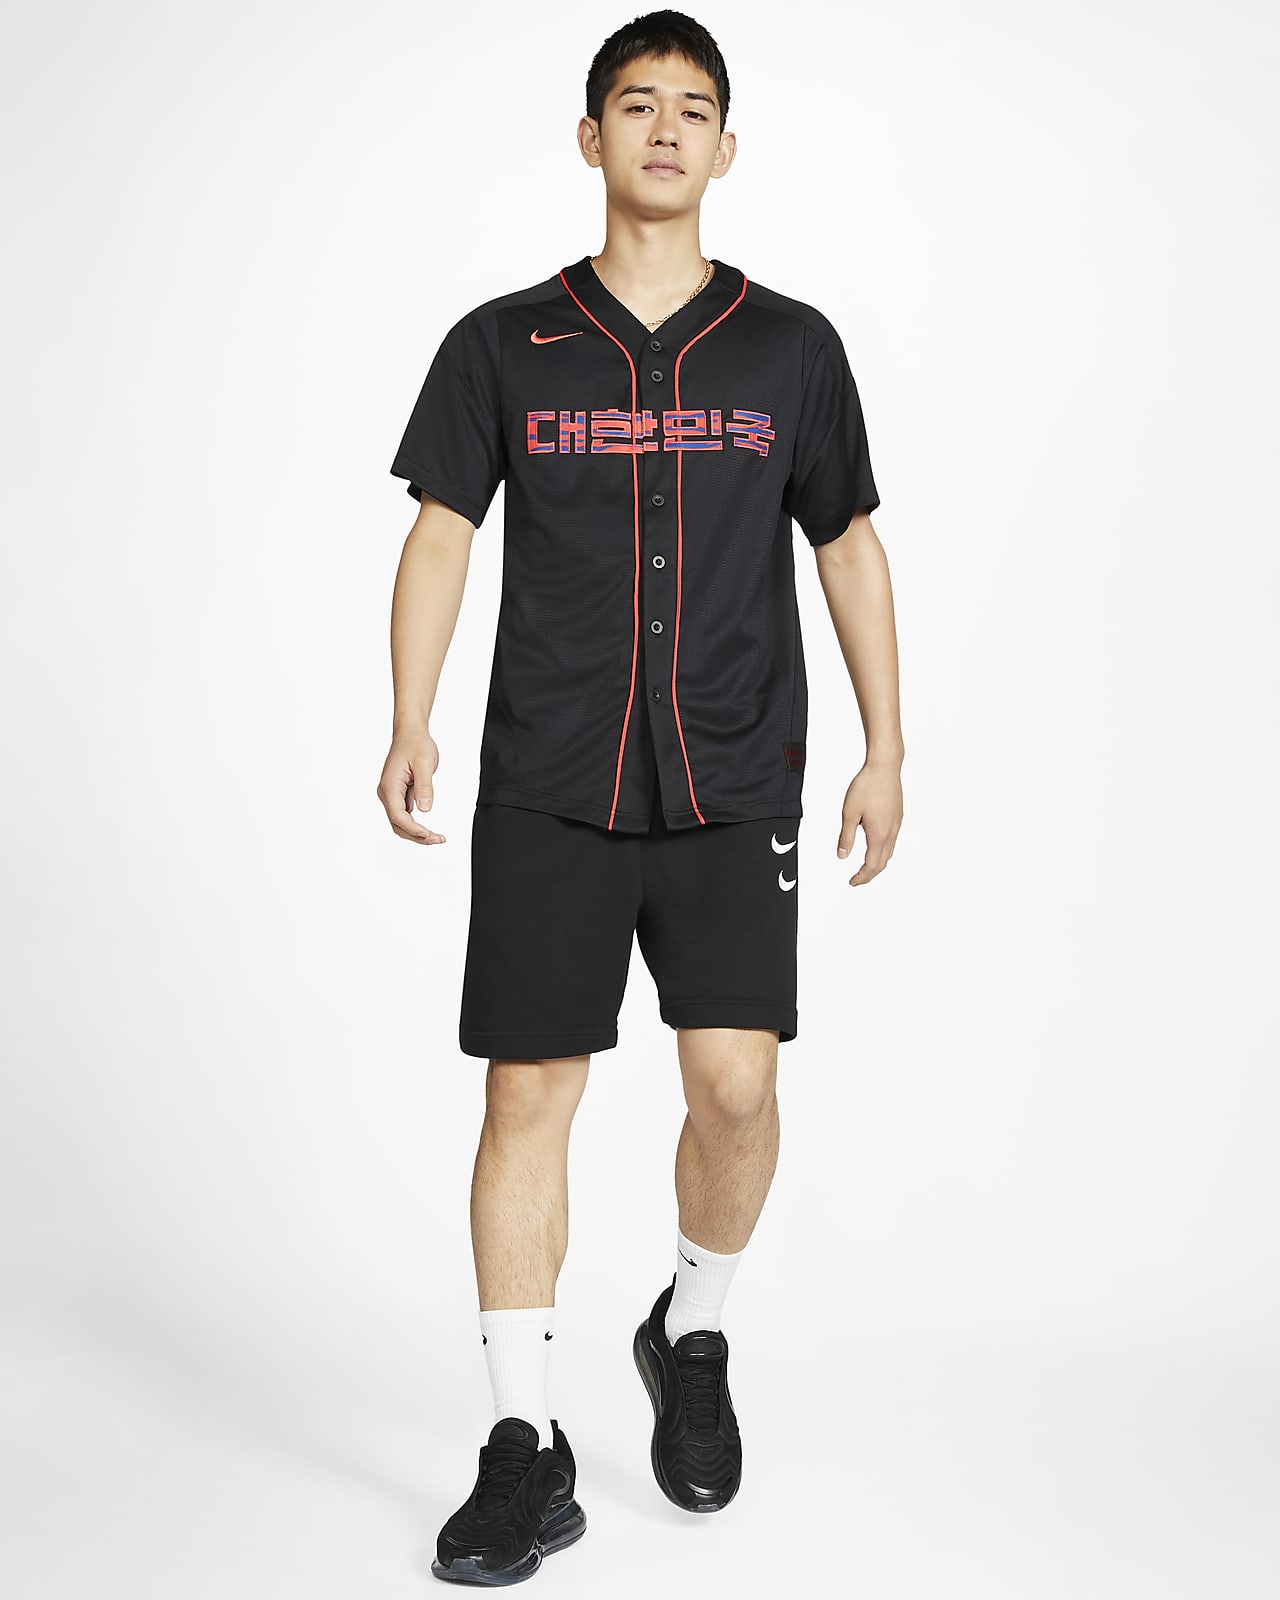 baseball jersey with shorts